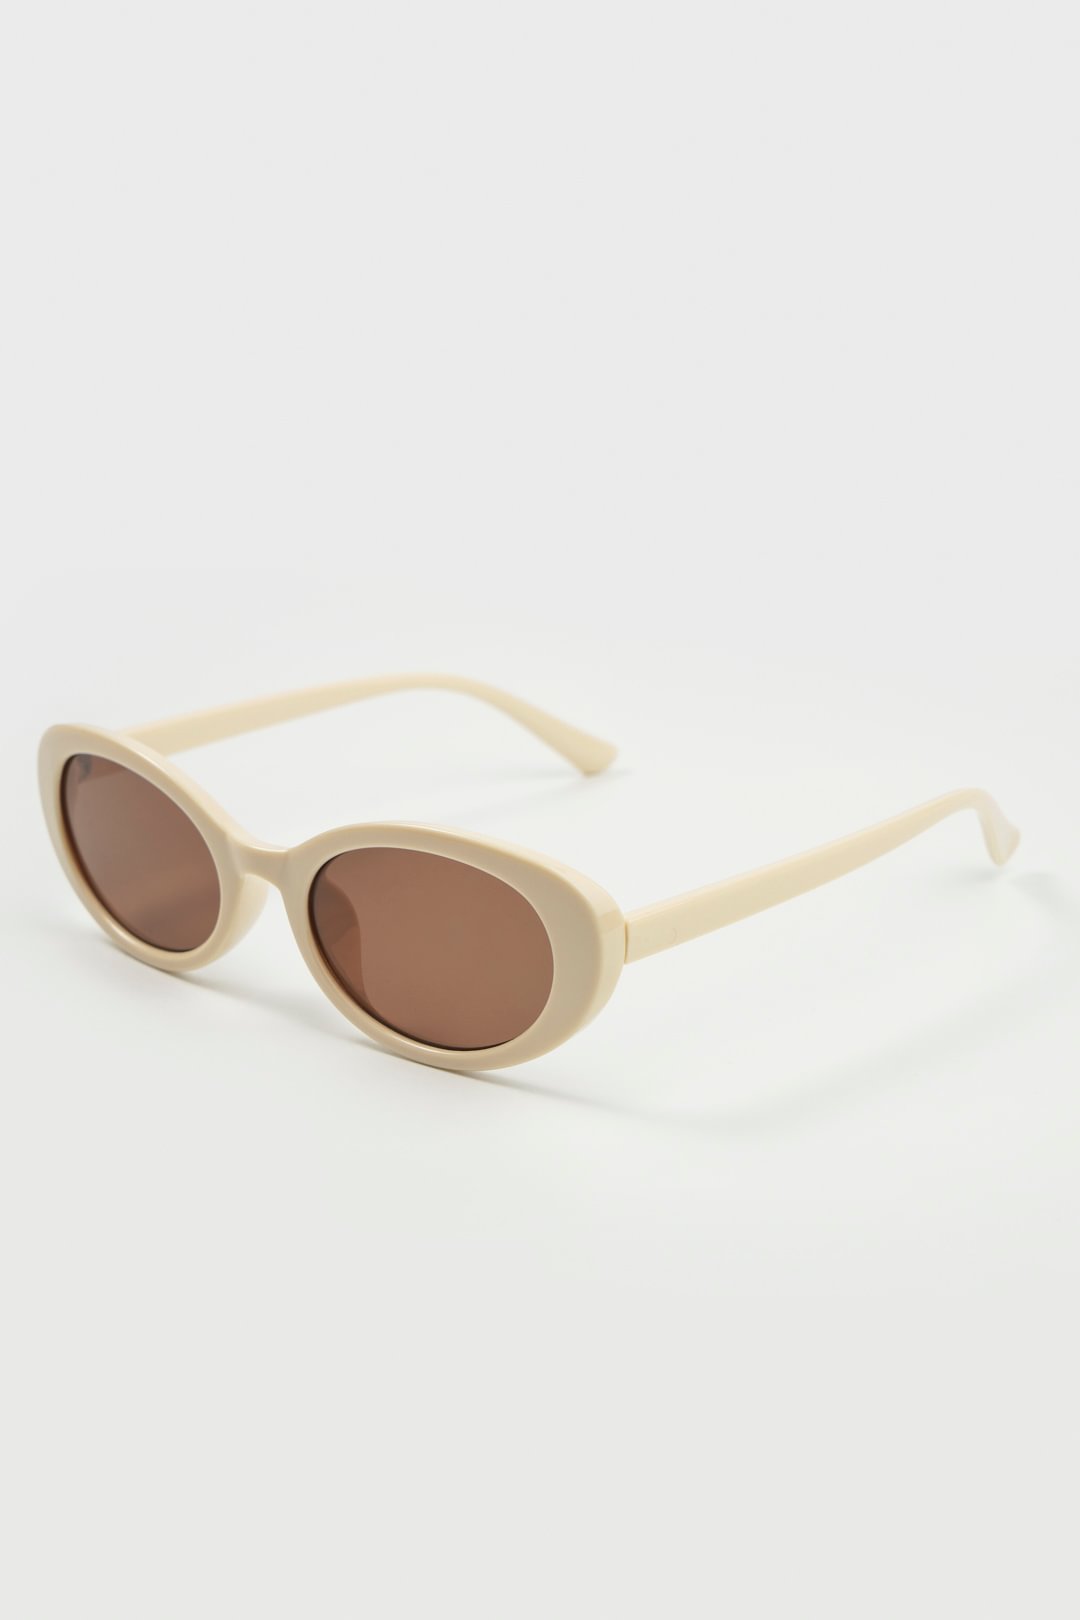 FashionV-FashionV Oval Frames Sunglasses In Ivory With Beige Lens